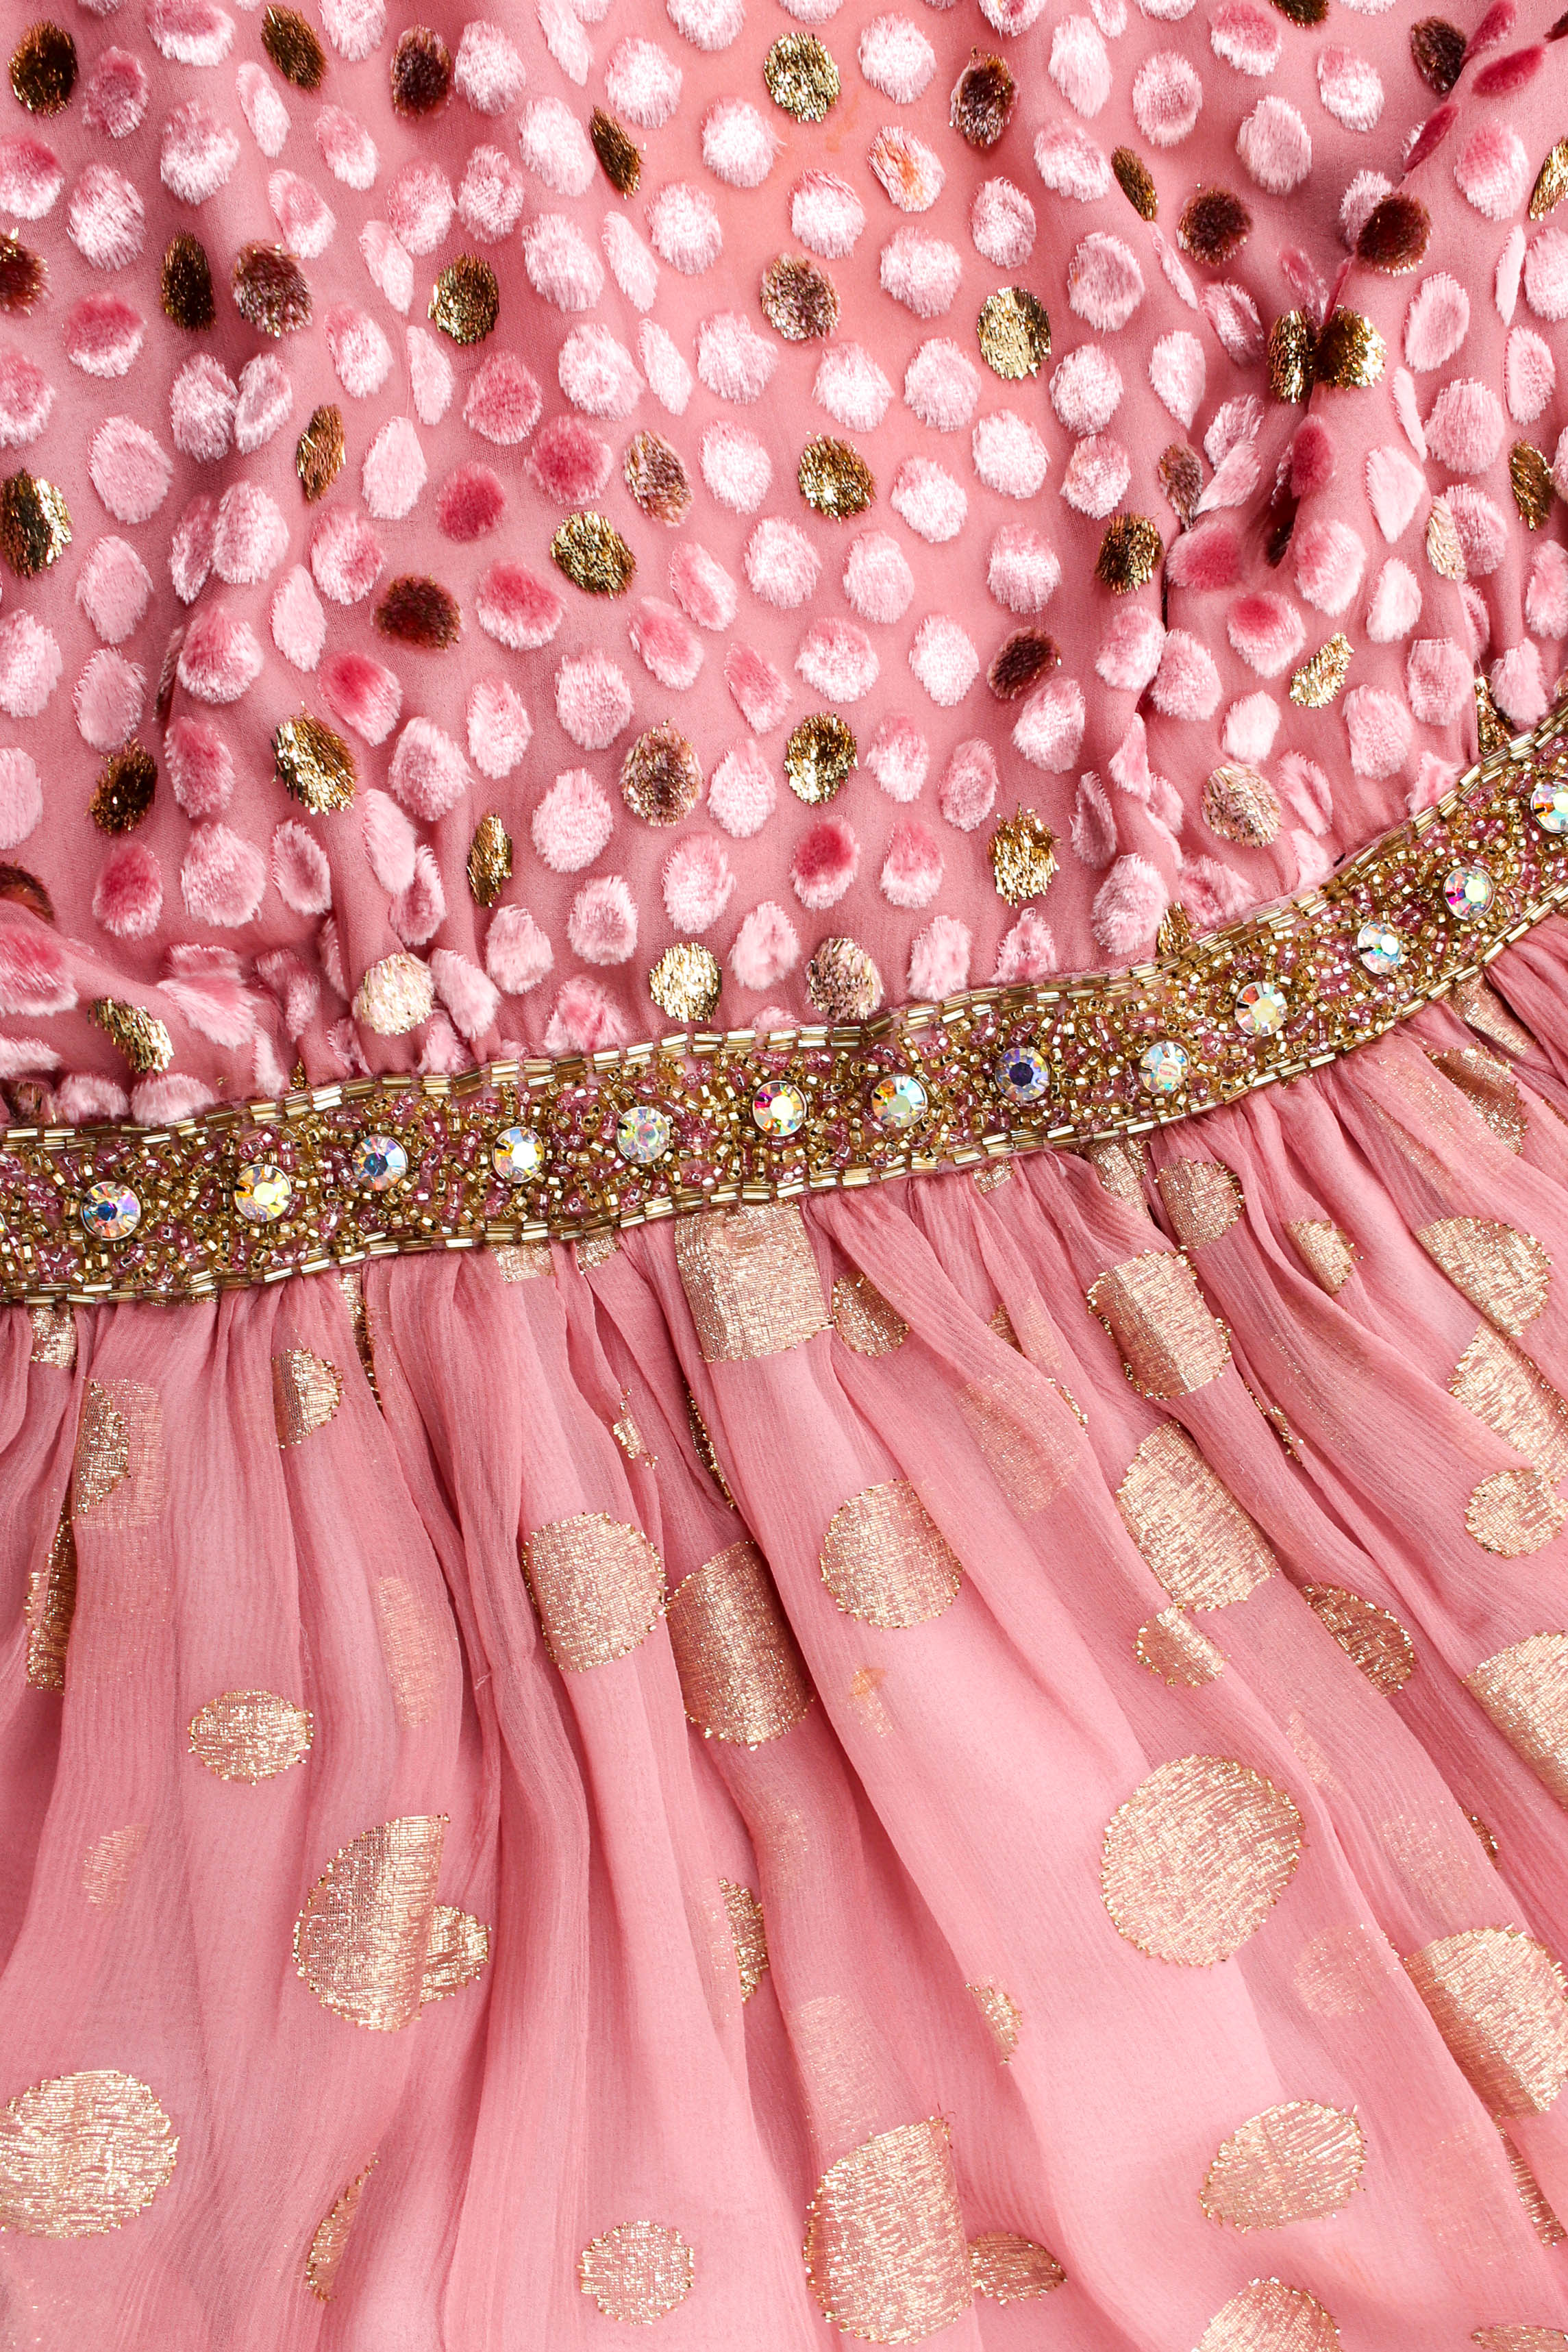 Vintage Adele Simpson Beaded Textured Dot Dress beaded waist detail  @ Recess LA